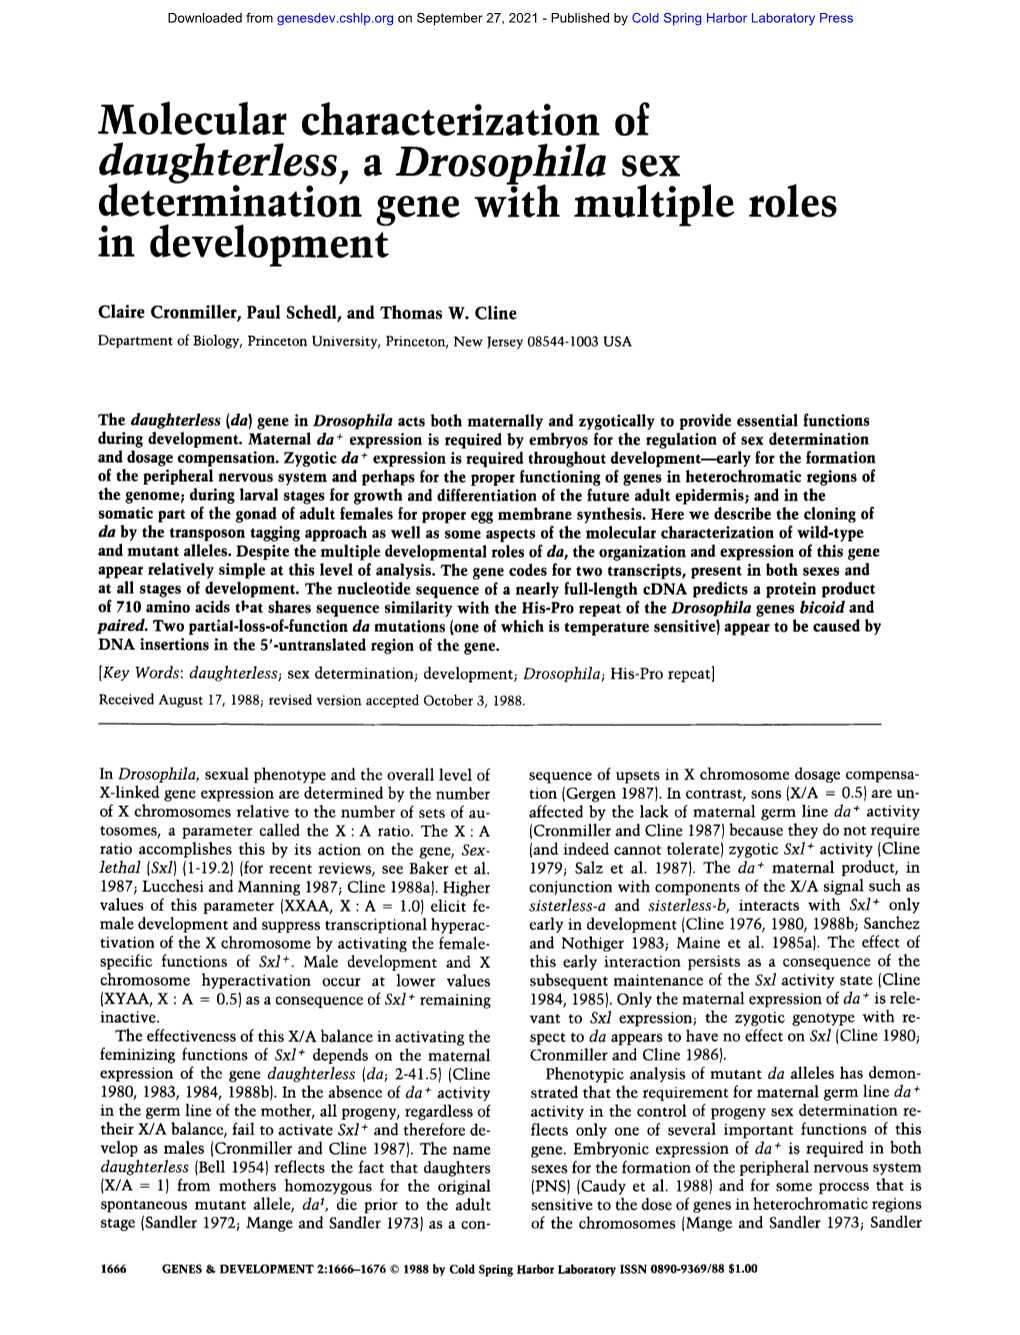 Daughterless, a Drosophila Sex Determination Gene with Multiple Roles in Development